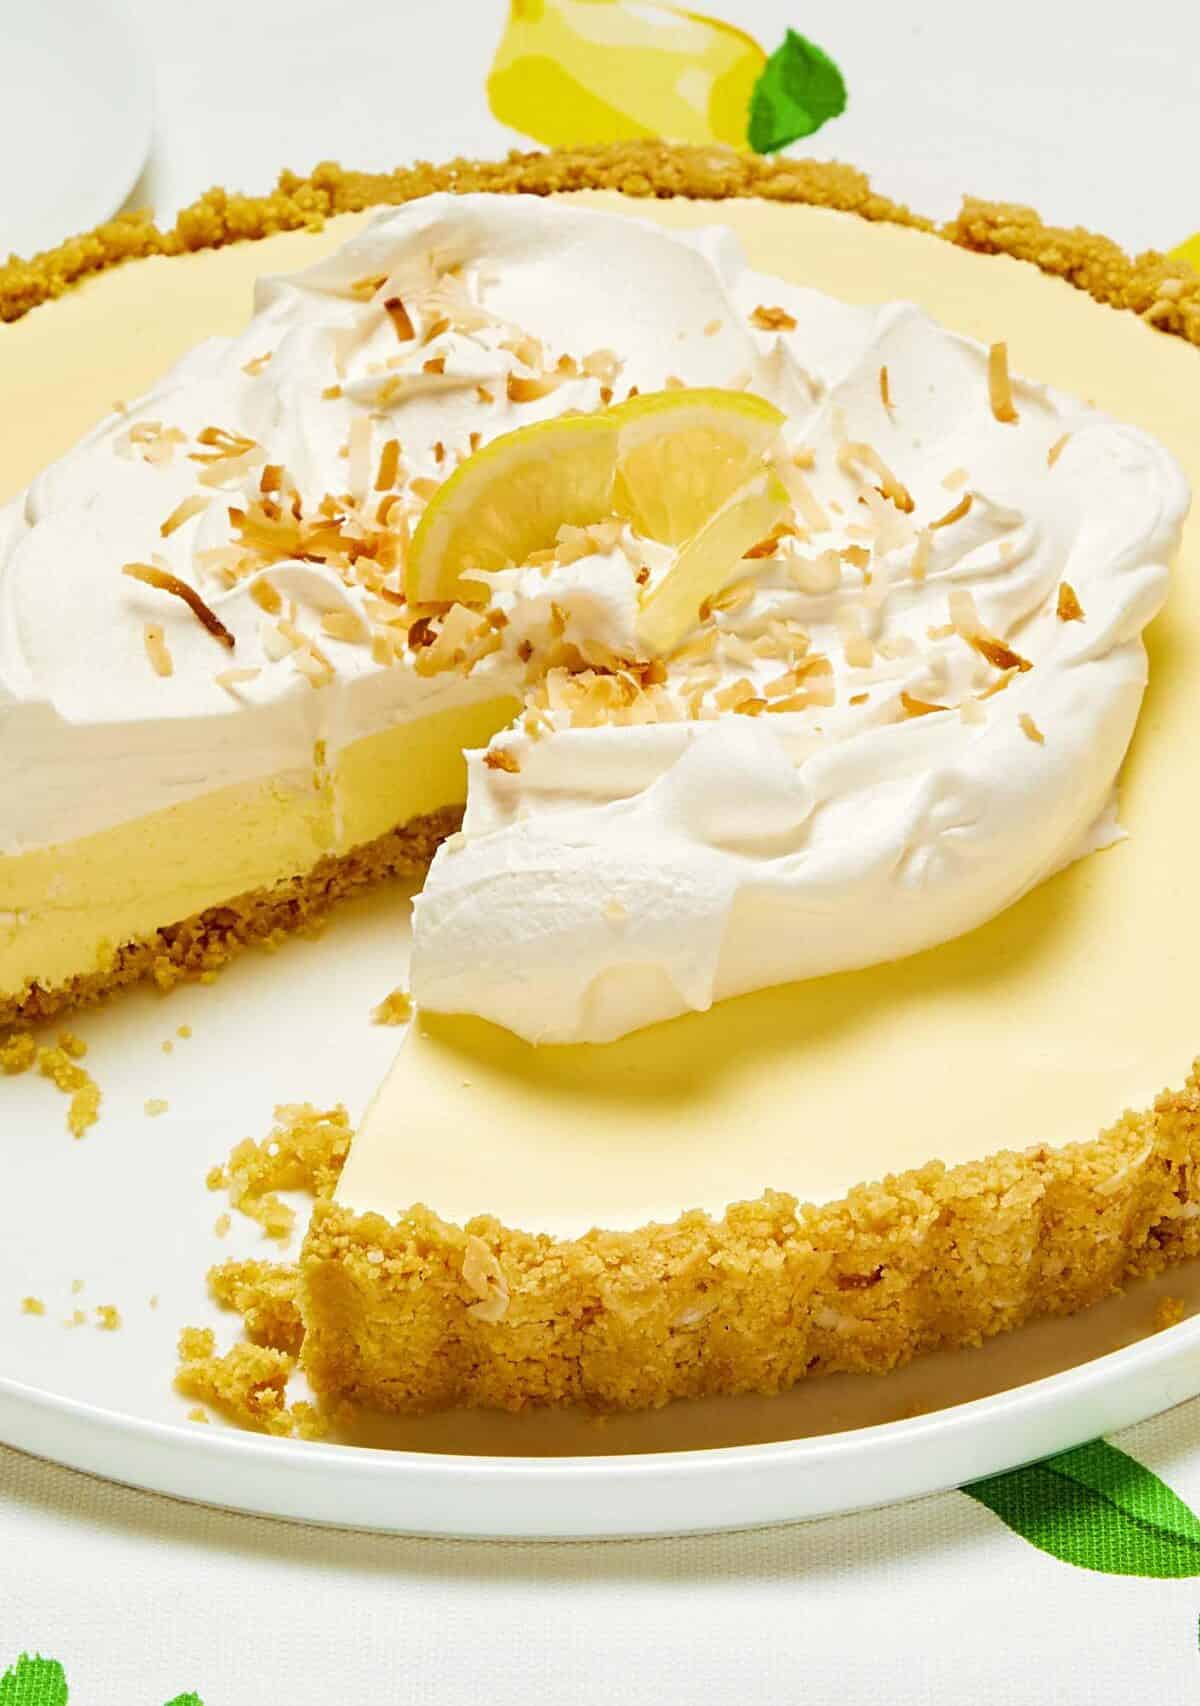   Tangy lemon meets creamy cheesecake